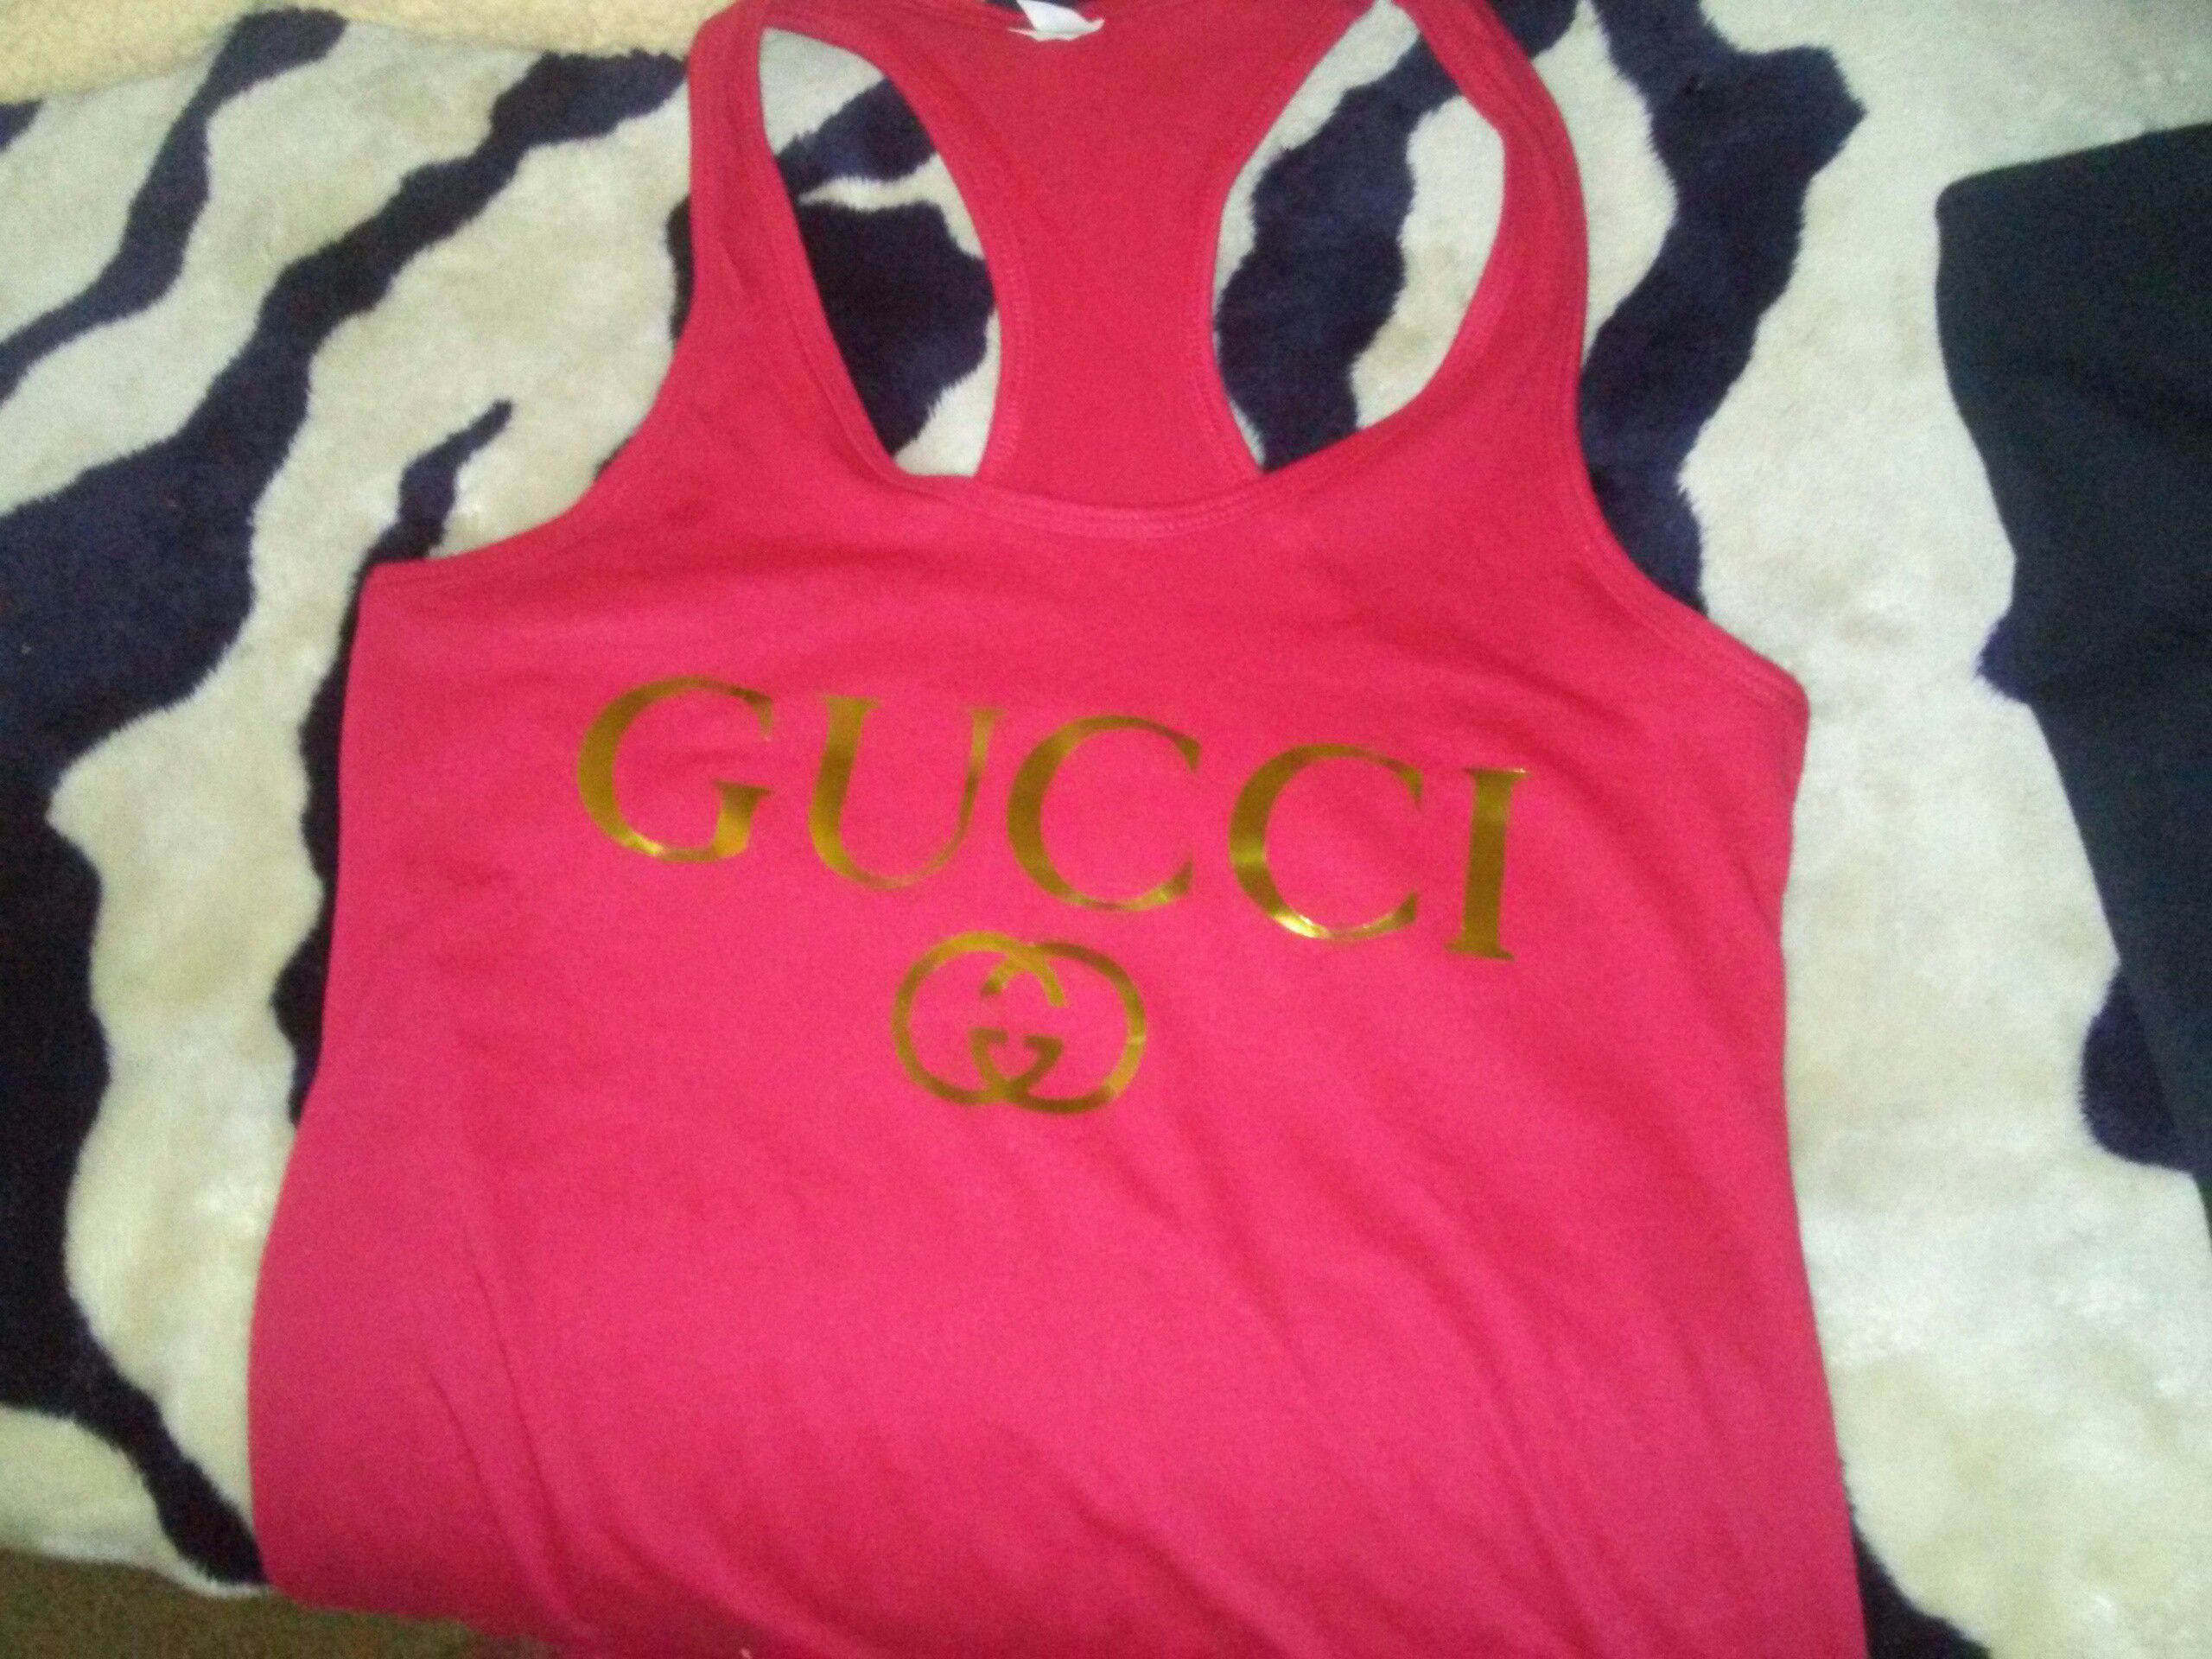 Gucci tank top ladies